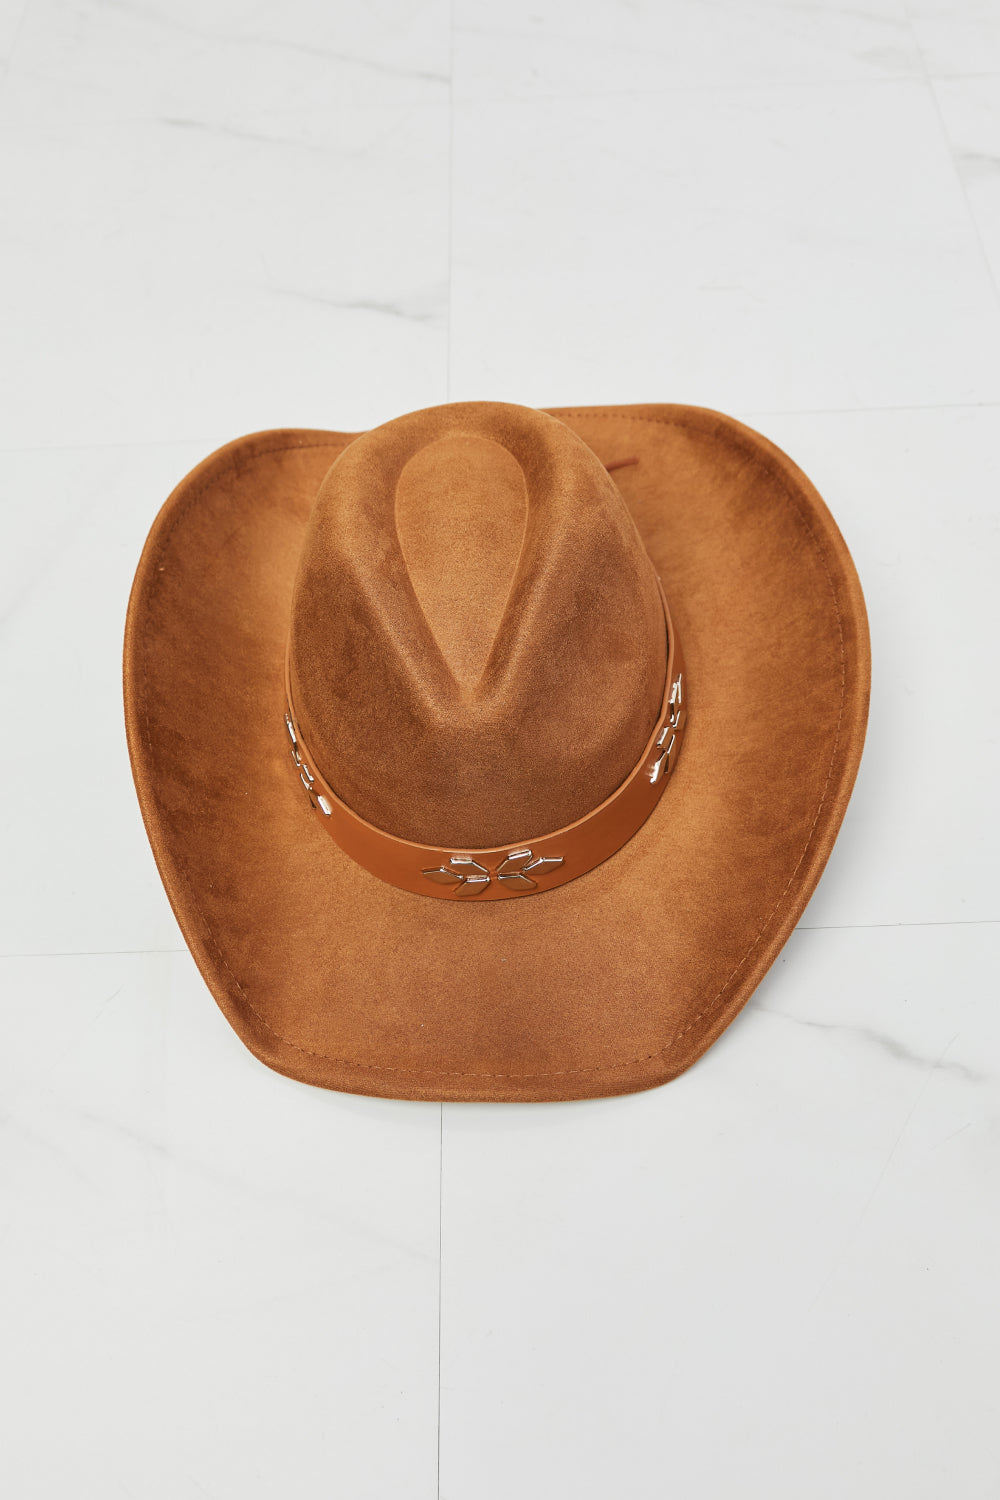 Fame Desert Adventure Cowboy Hat